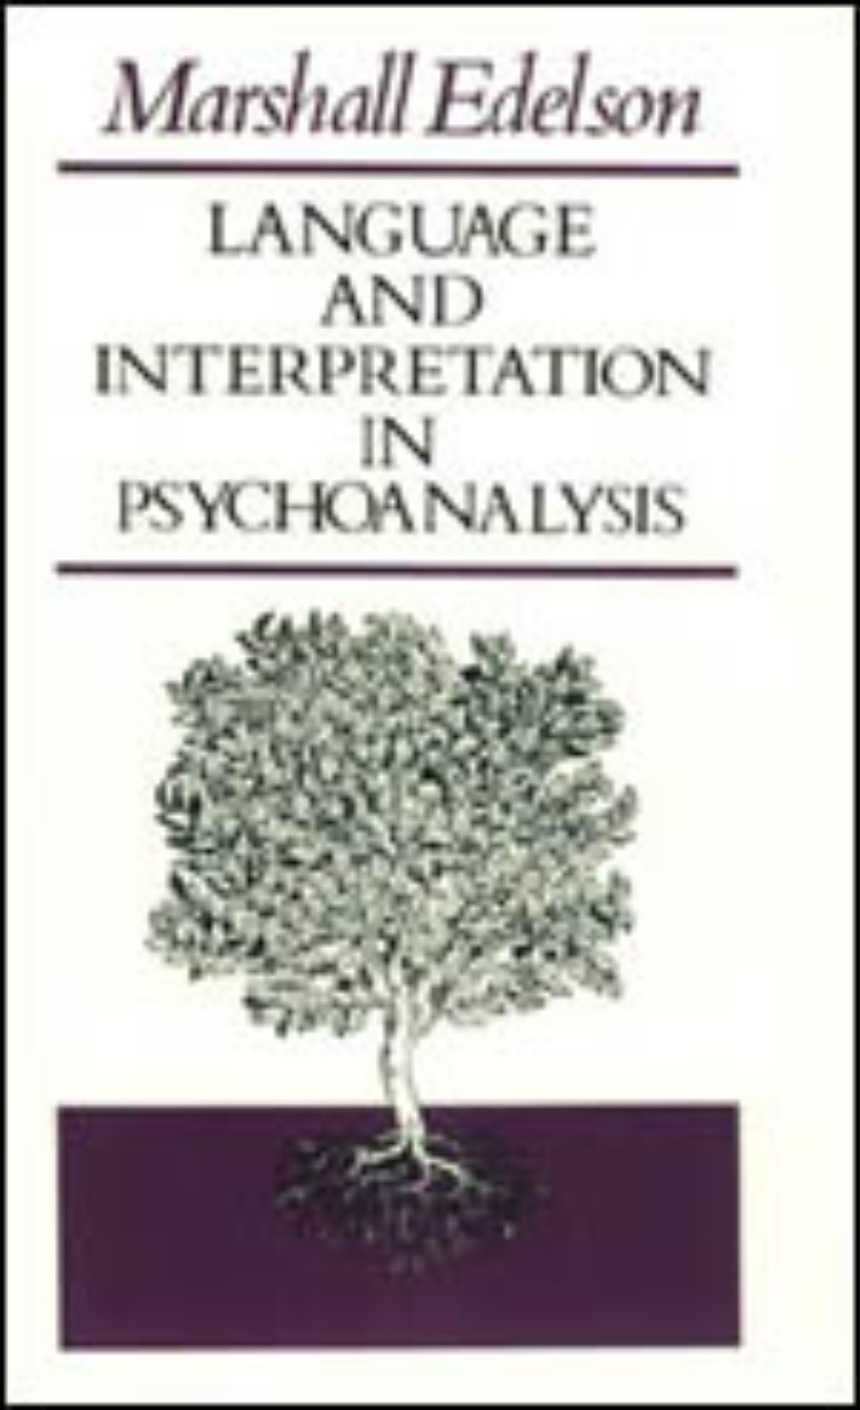 Language and Interpretation in Psychoanalysis